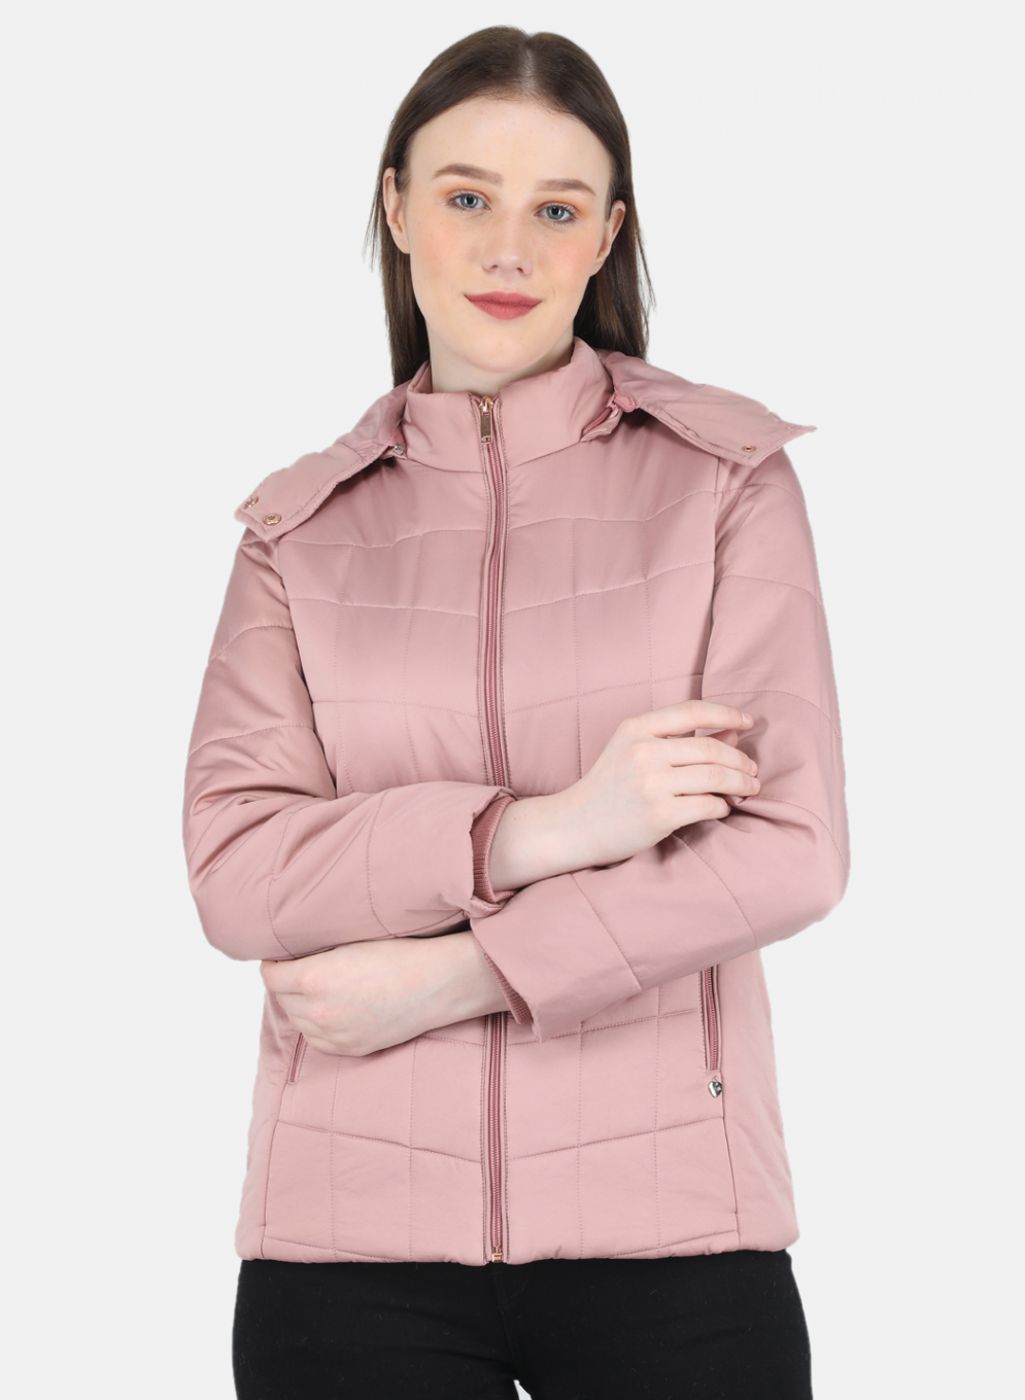 Buy Women Pink Solid Jacket Online in India - MOCA by Monte Carlo